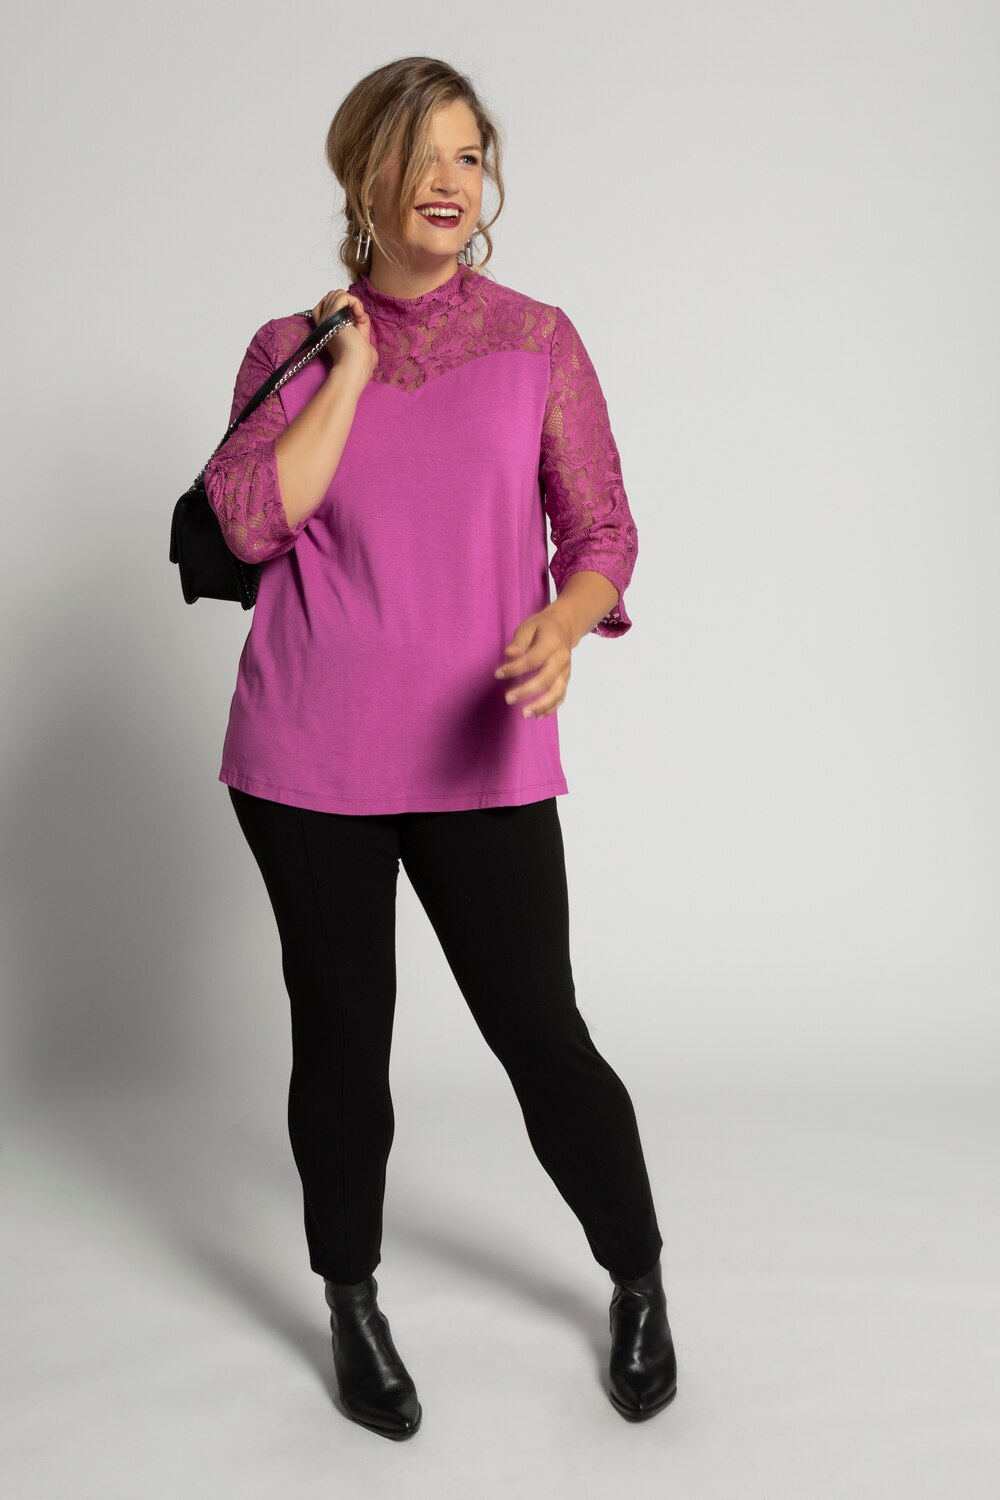 Plus Size Lace Yoke Turtleneck Stretch Knit Top, Woman, pink, size: 28/30, viscose/polyester/spandex, Ulla Popken